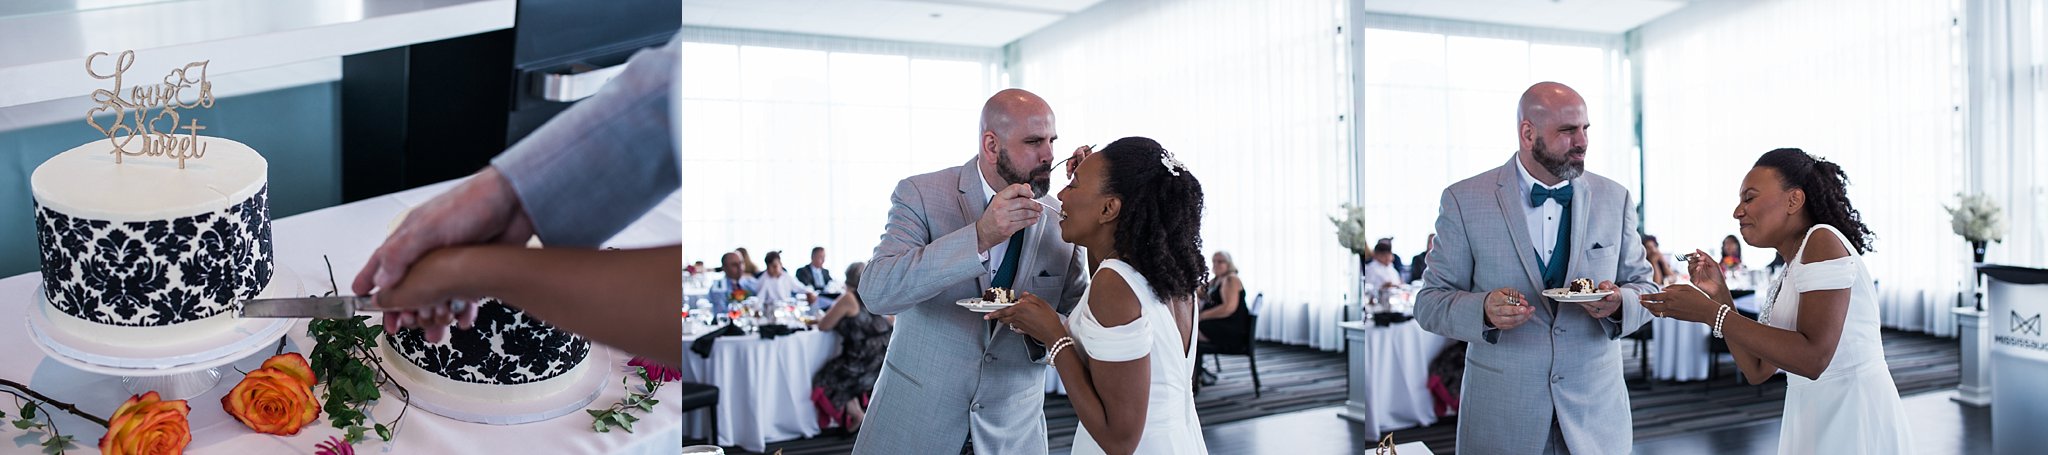 Jennifer Blaak Photography, Toronto Wedding Photographer, C Banquets, Bride and Groom cutting wedding cake